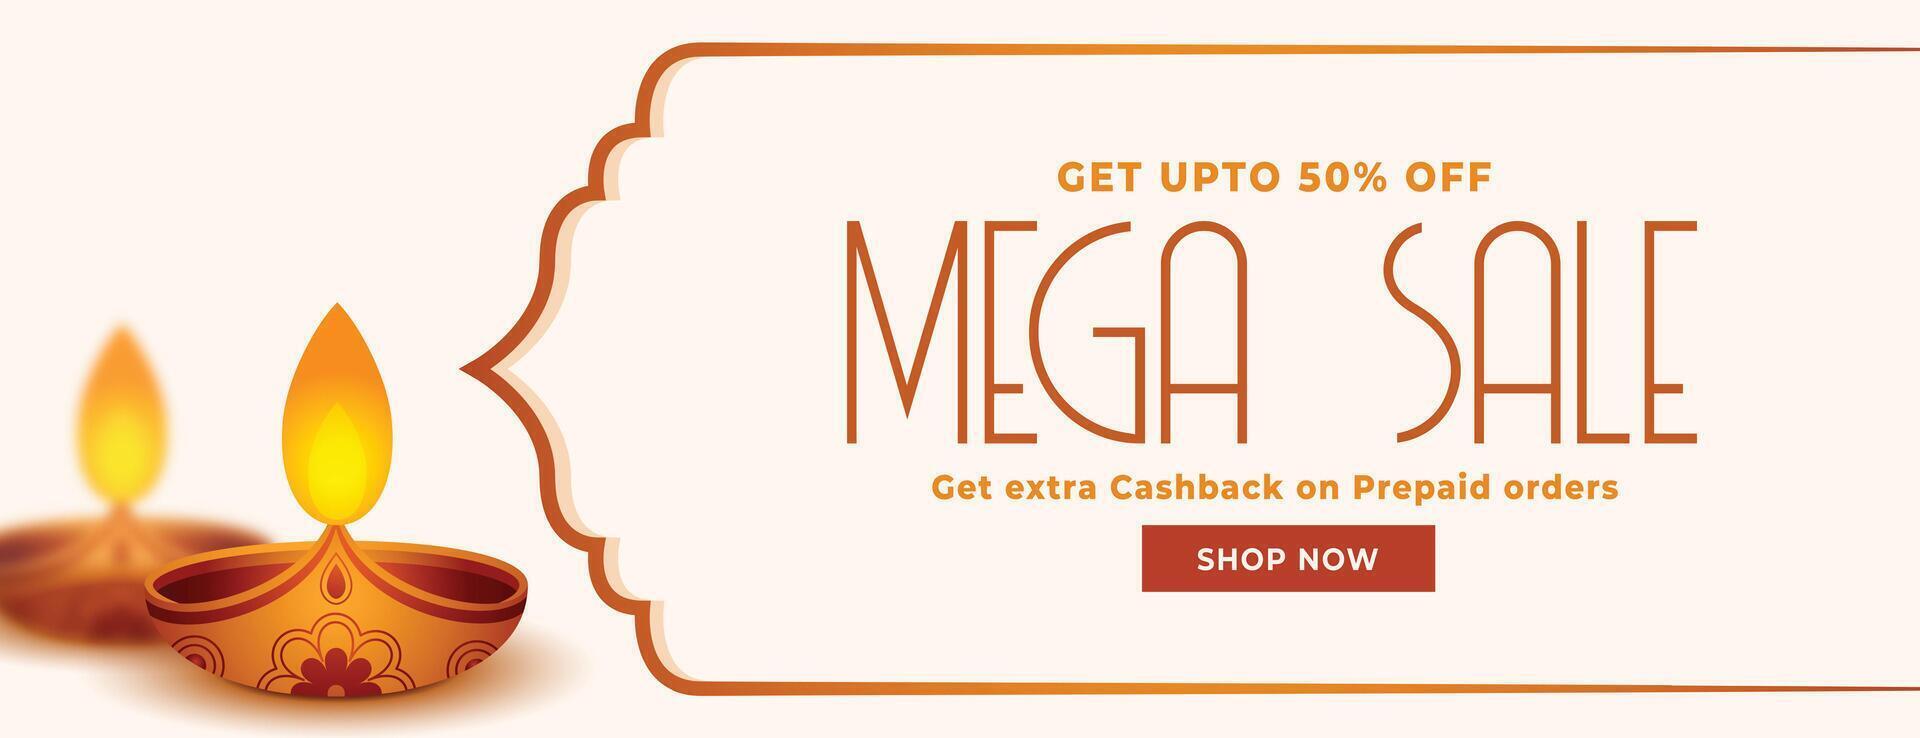 mega sale diwali banner with offer details and isolated diya design vector